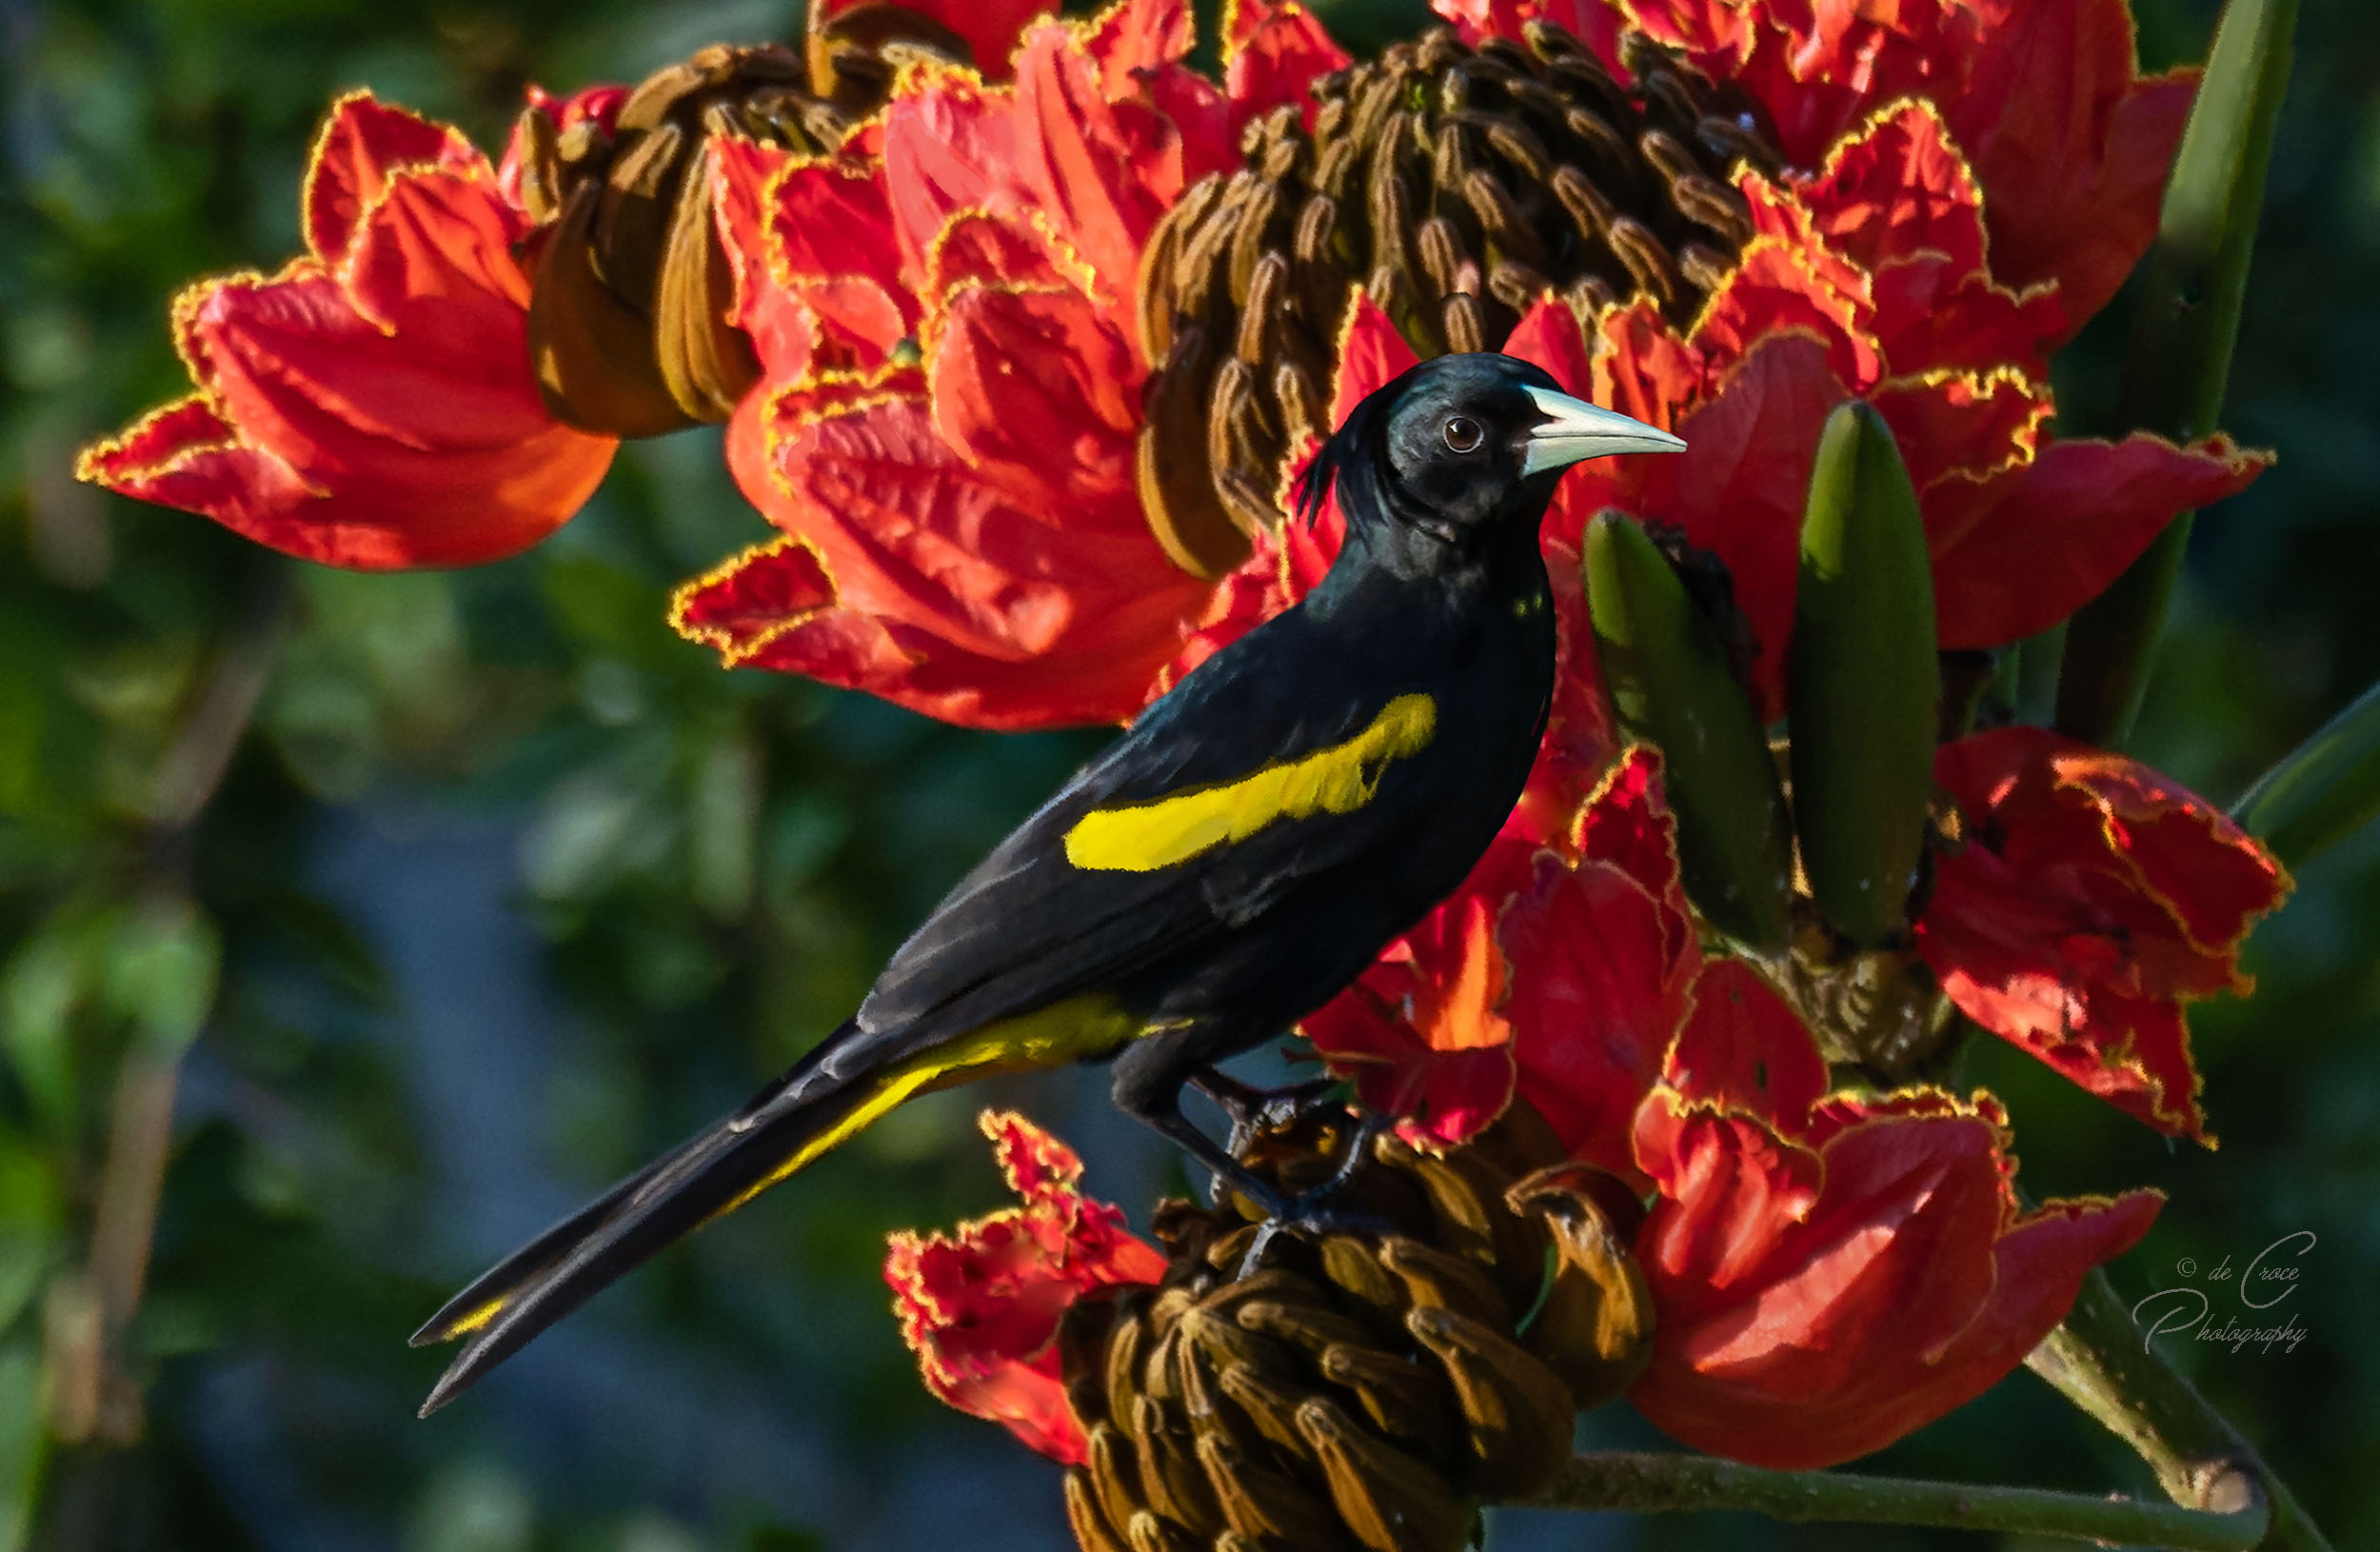 Mexico bird photography is extensive at Vida Del Mar Colima